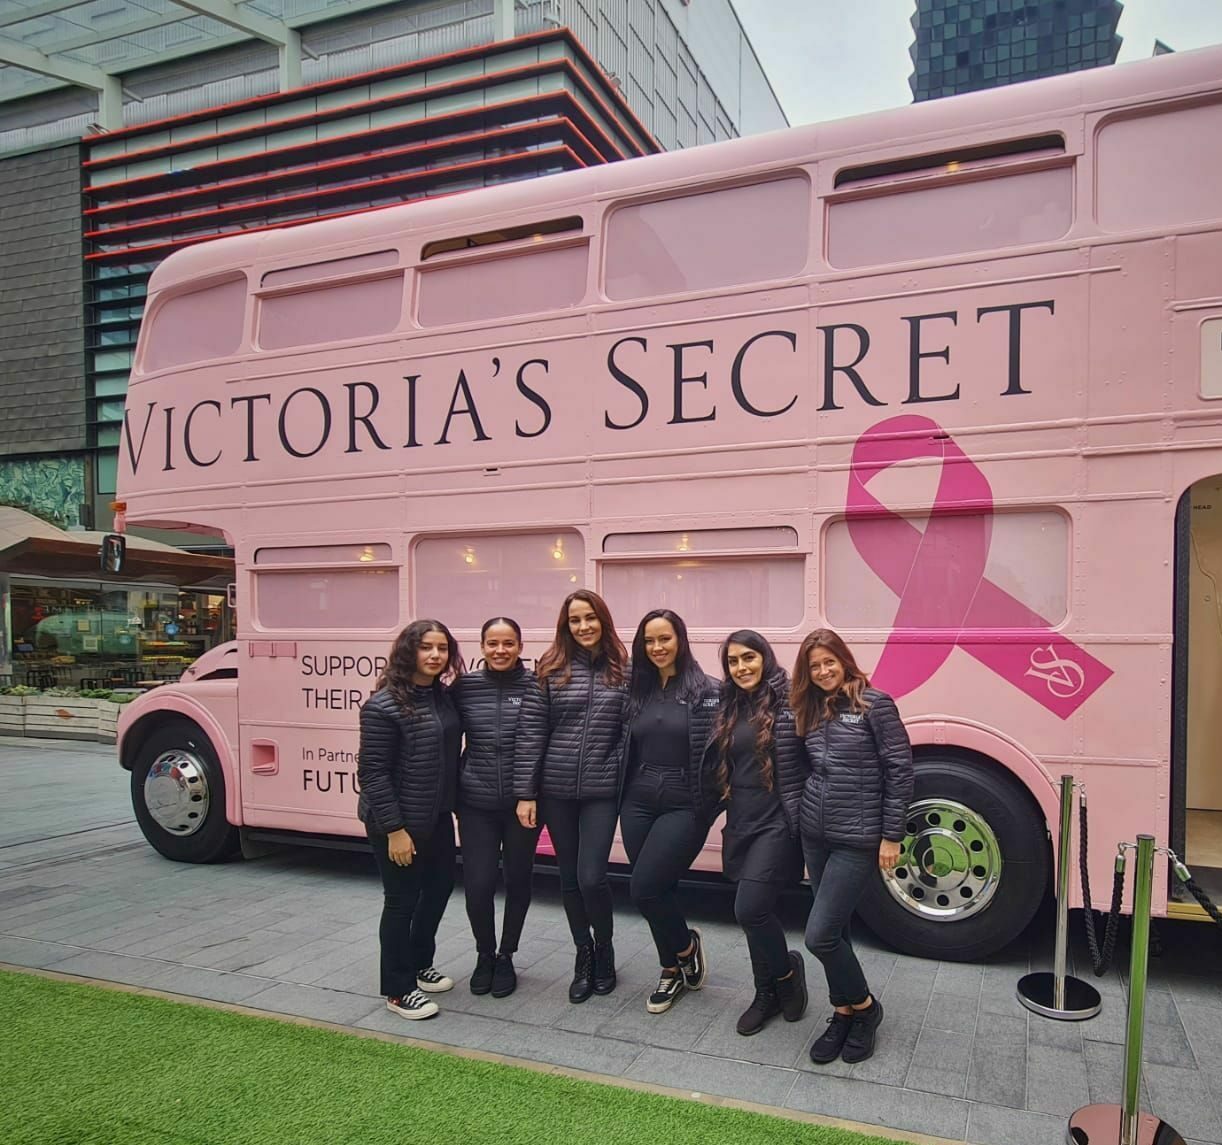 Victoria's secret bus raising awareness of breast cancer